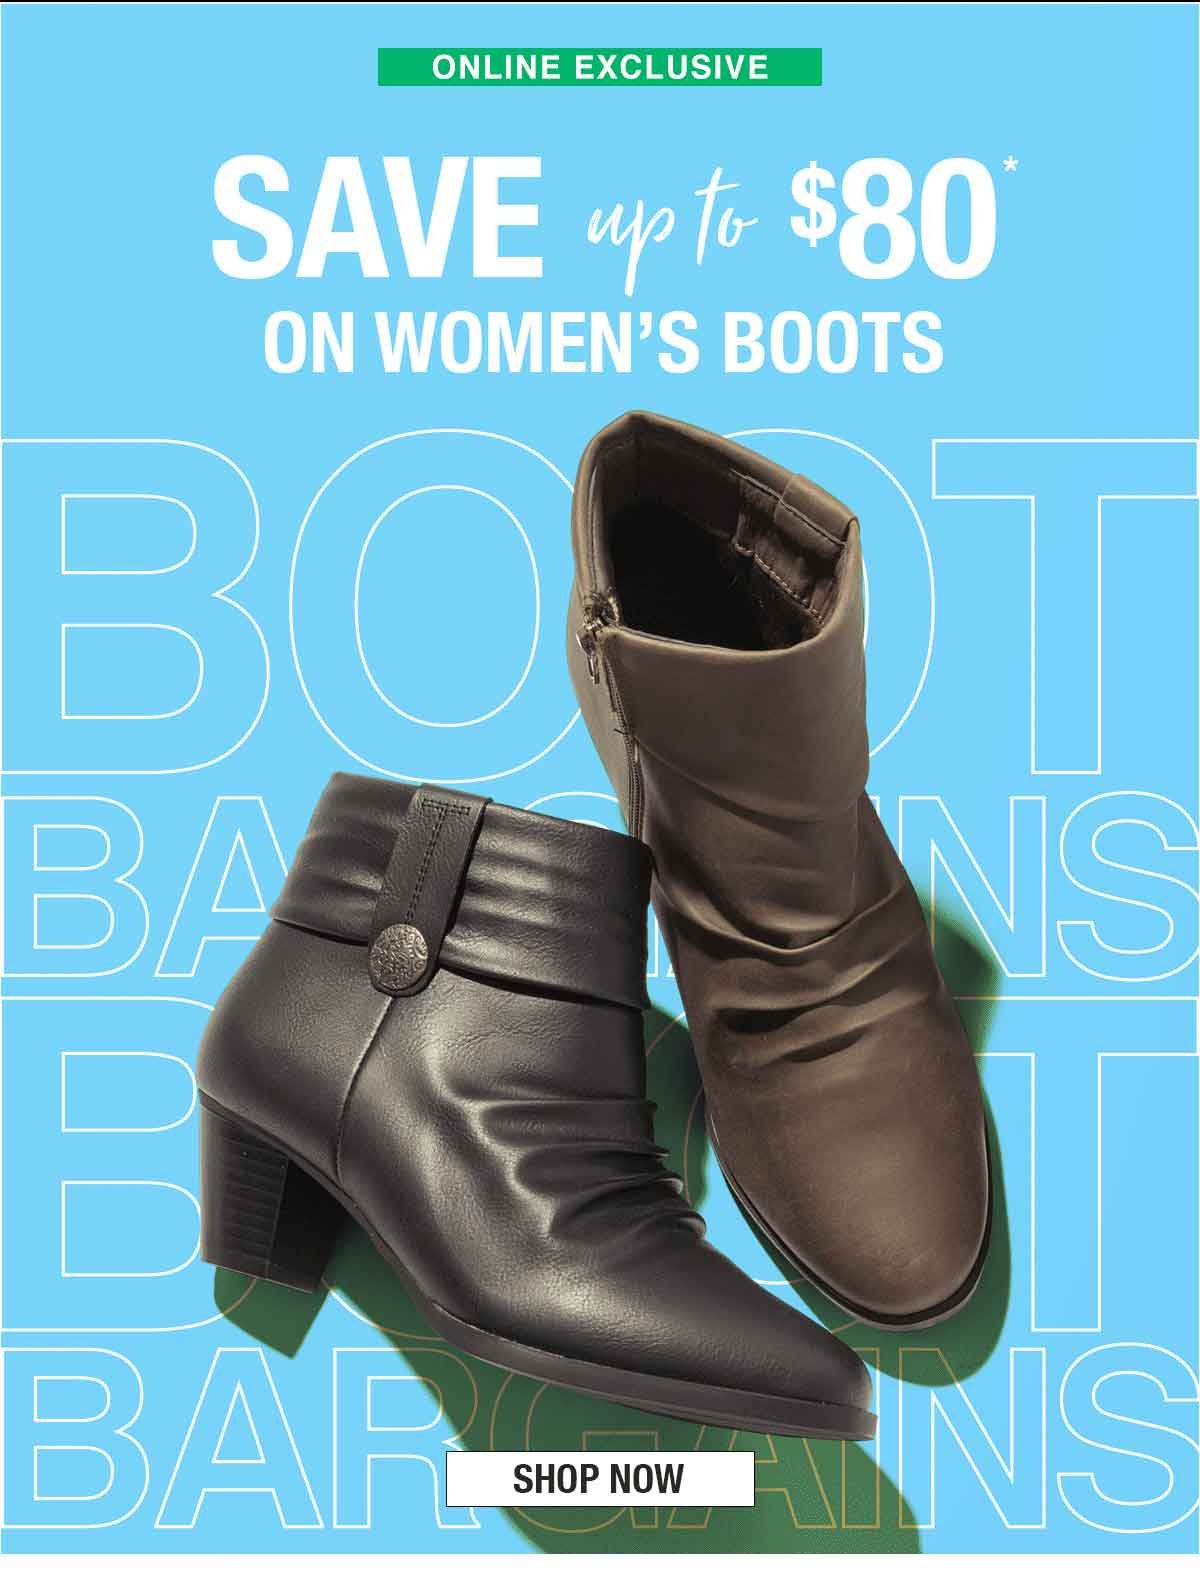 rivers ladies boots sale